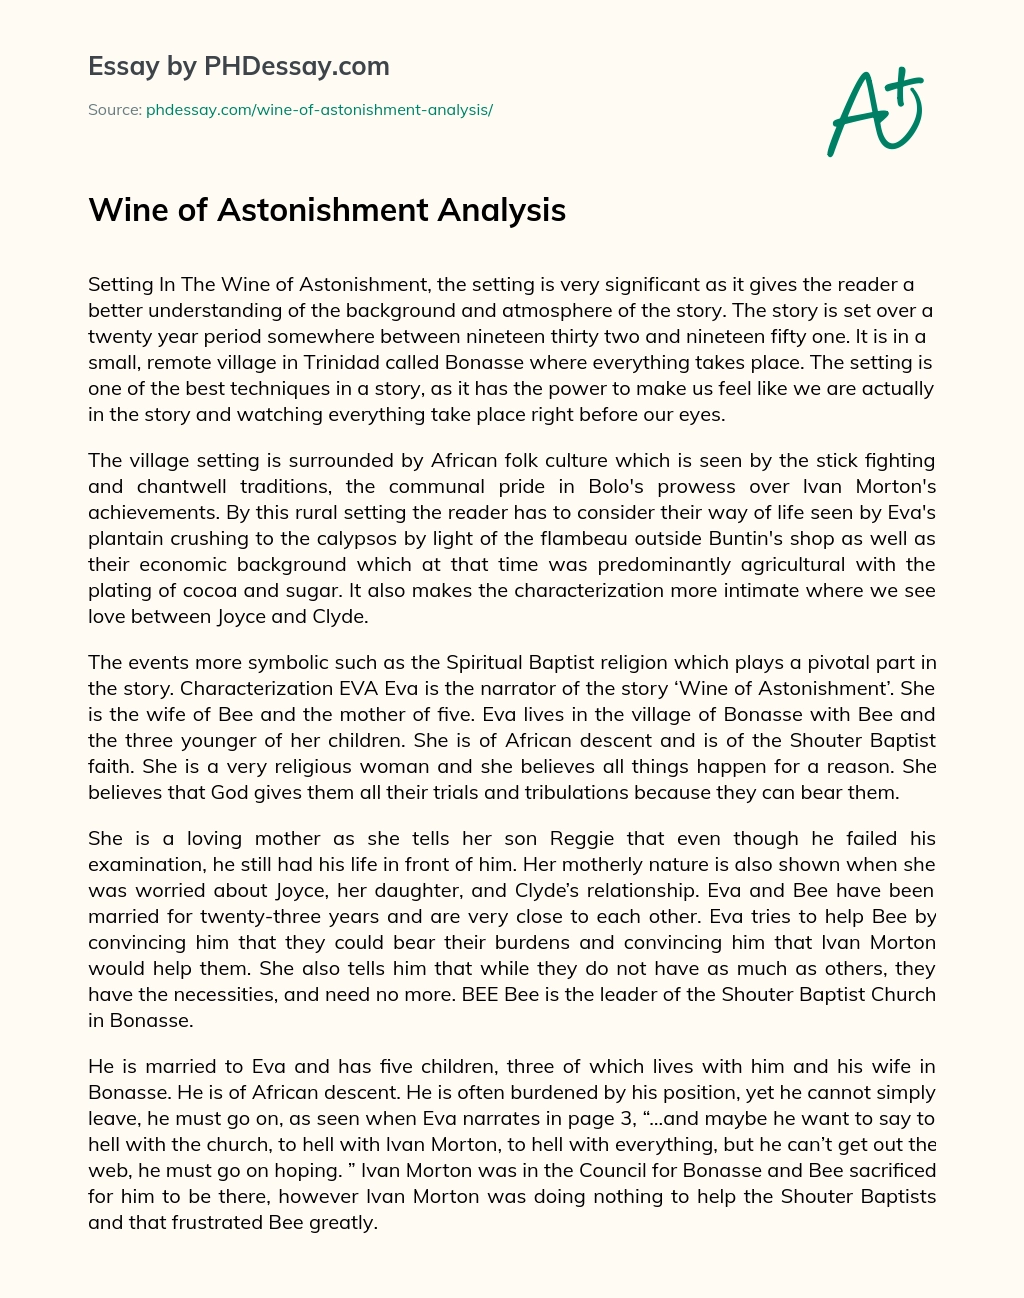 Wine of Astonishment Analysis essay